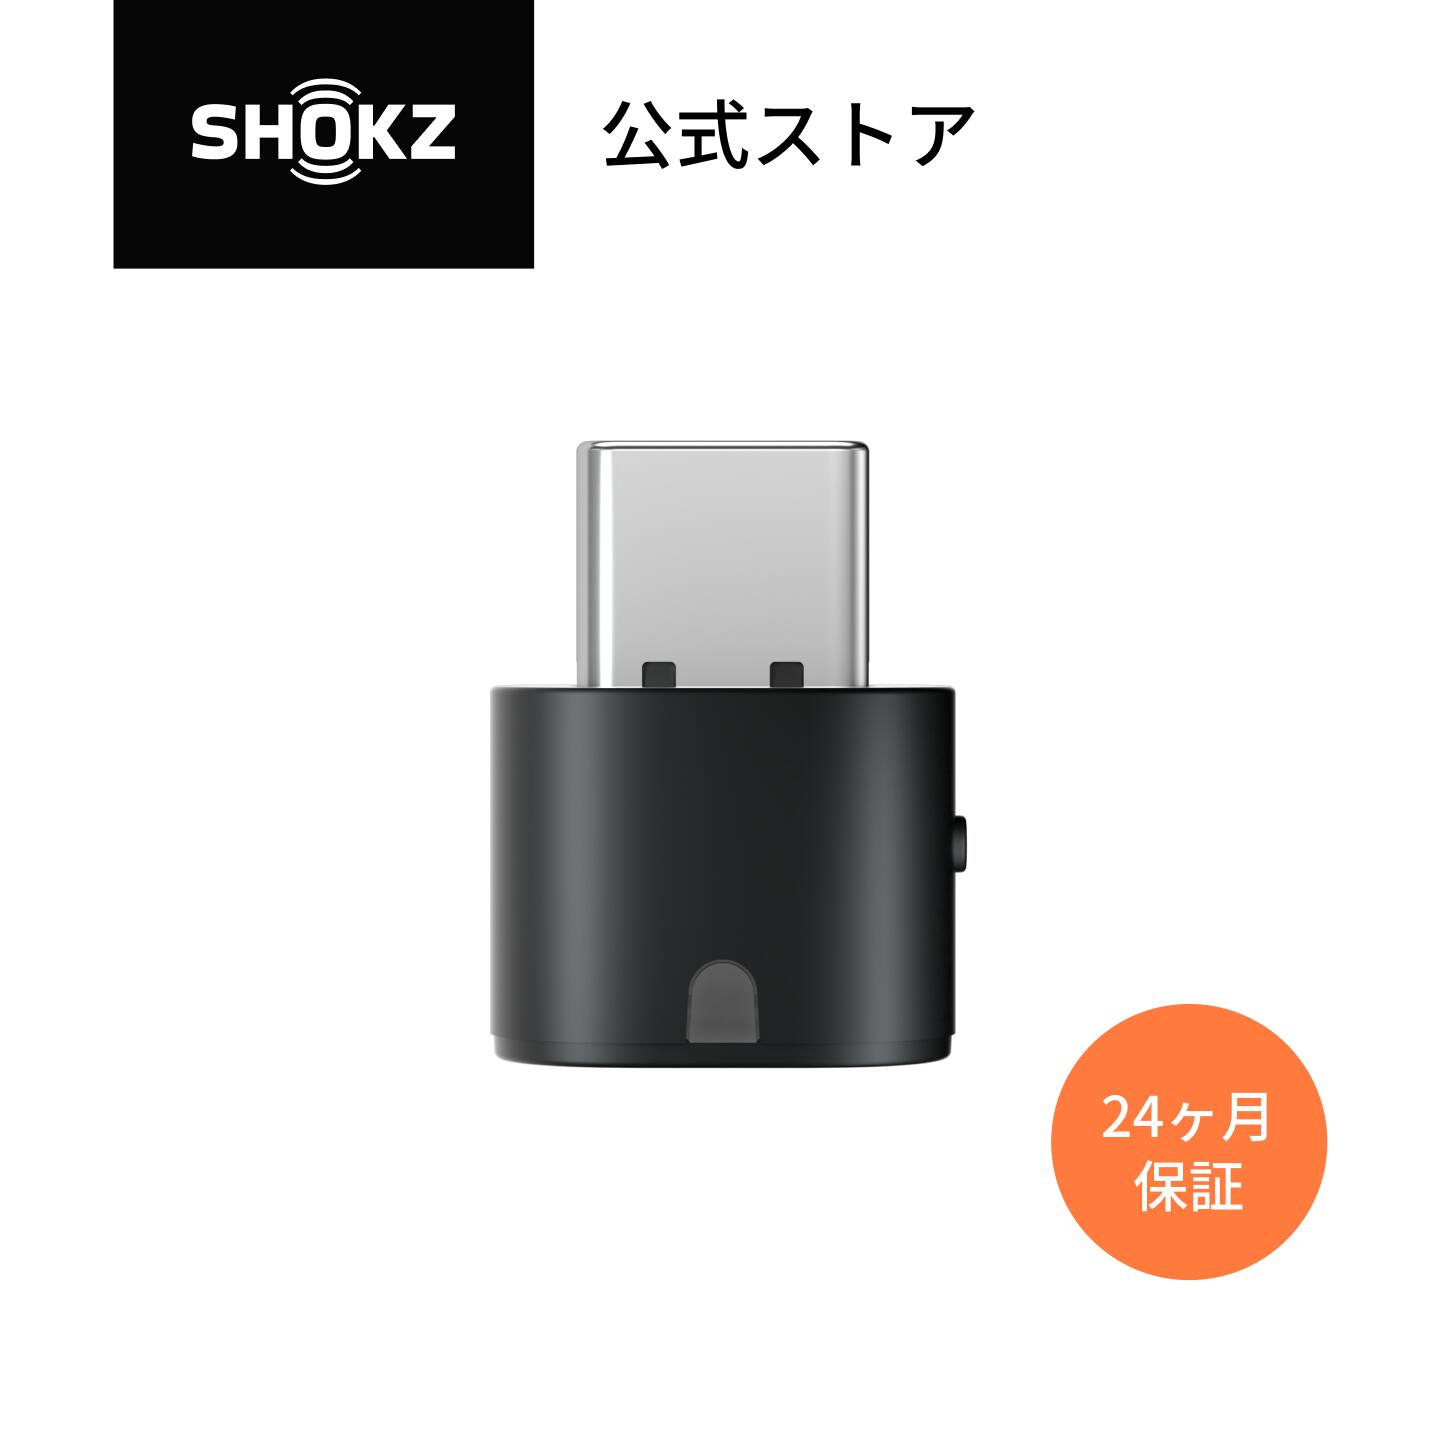 Loop 110 Bluetooth アダプター Shokz(ショックス) USB-C 送料無料 公式ストア